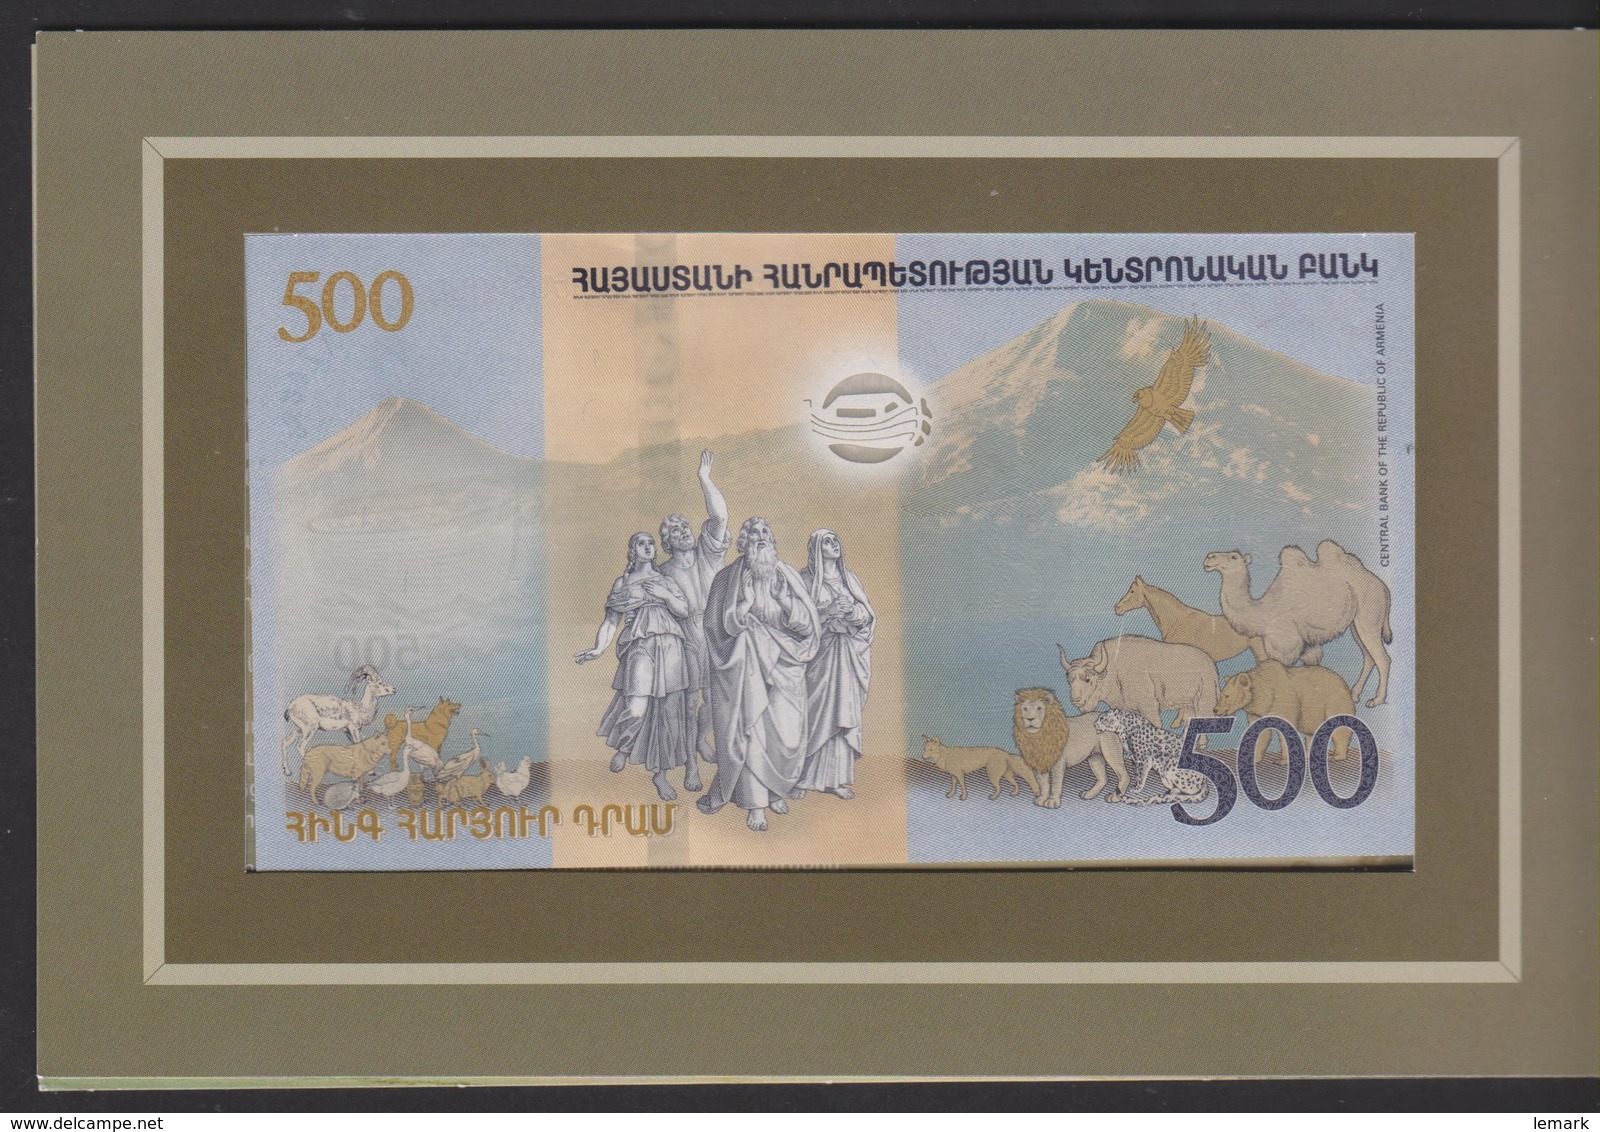 Armenia 500 Dram 2017 P60 Commemorative, With Folder UNC - Arménie